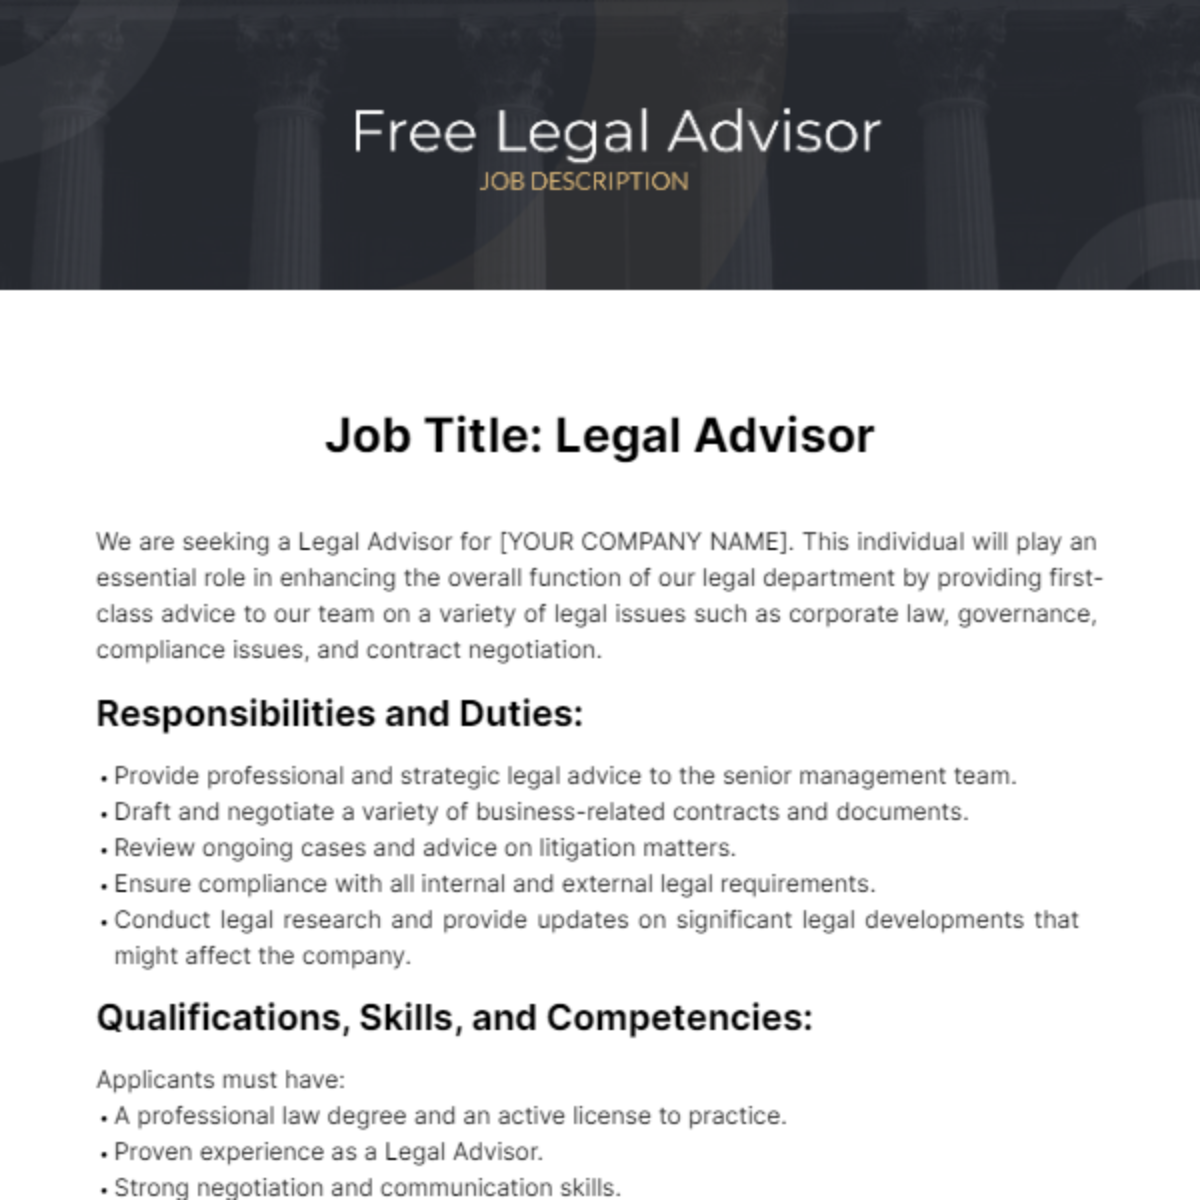 Free Legal Advisor Job Description Template